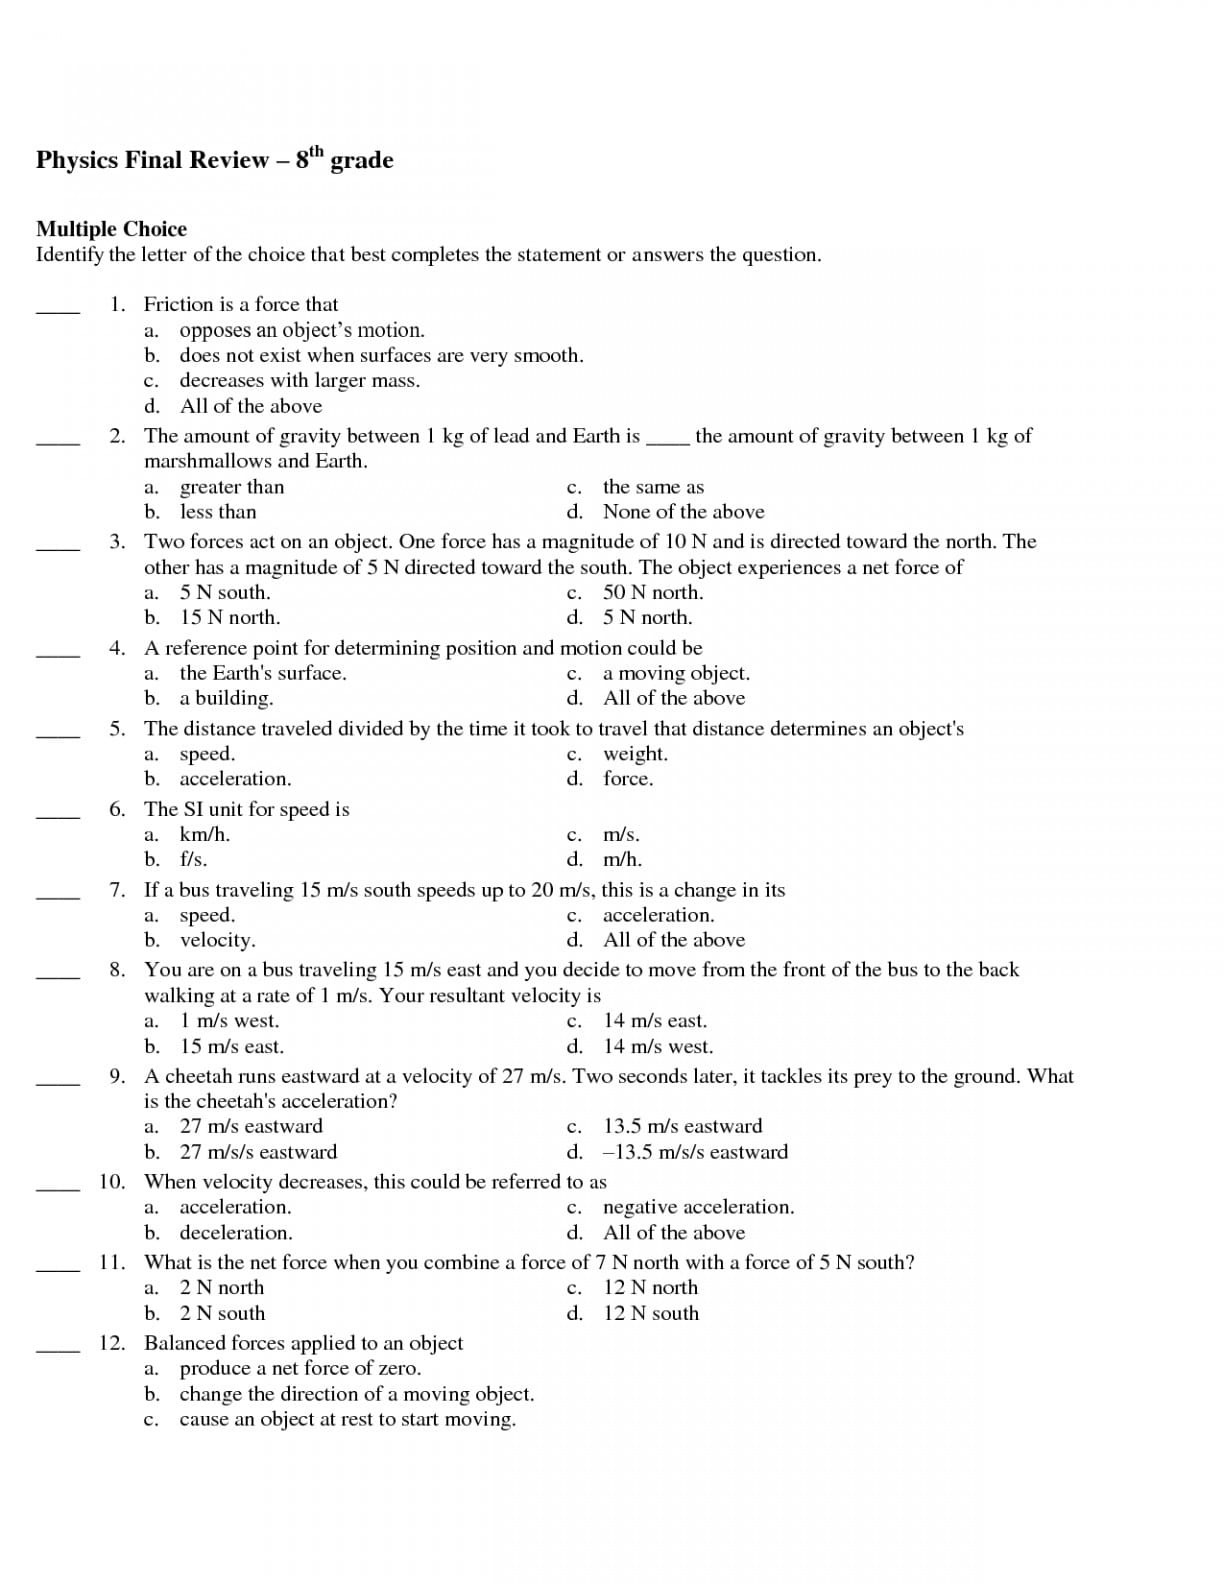 reading-comprehension-worksheets-for-6th-grade